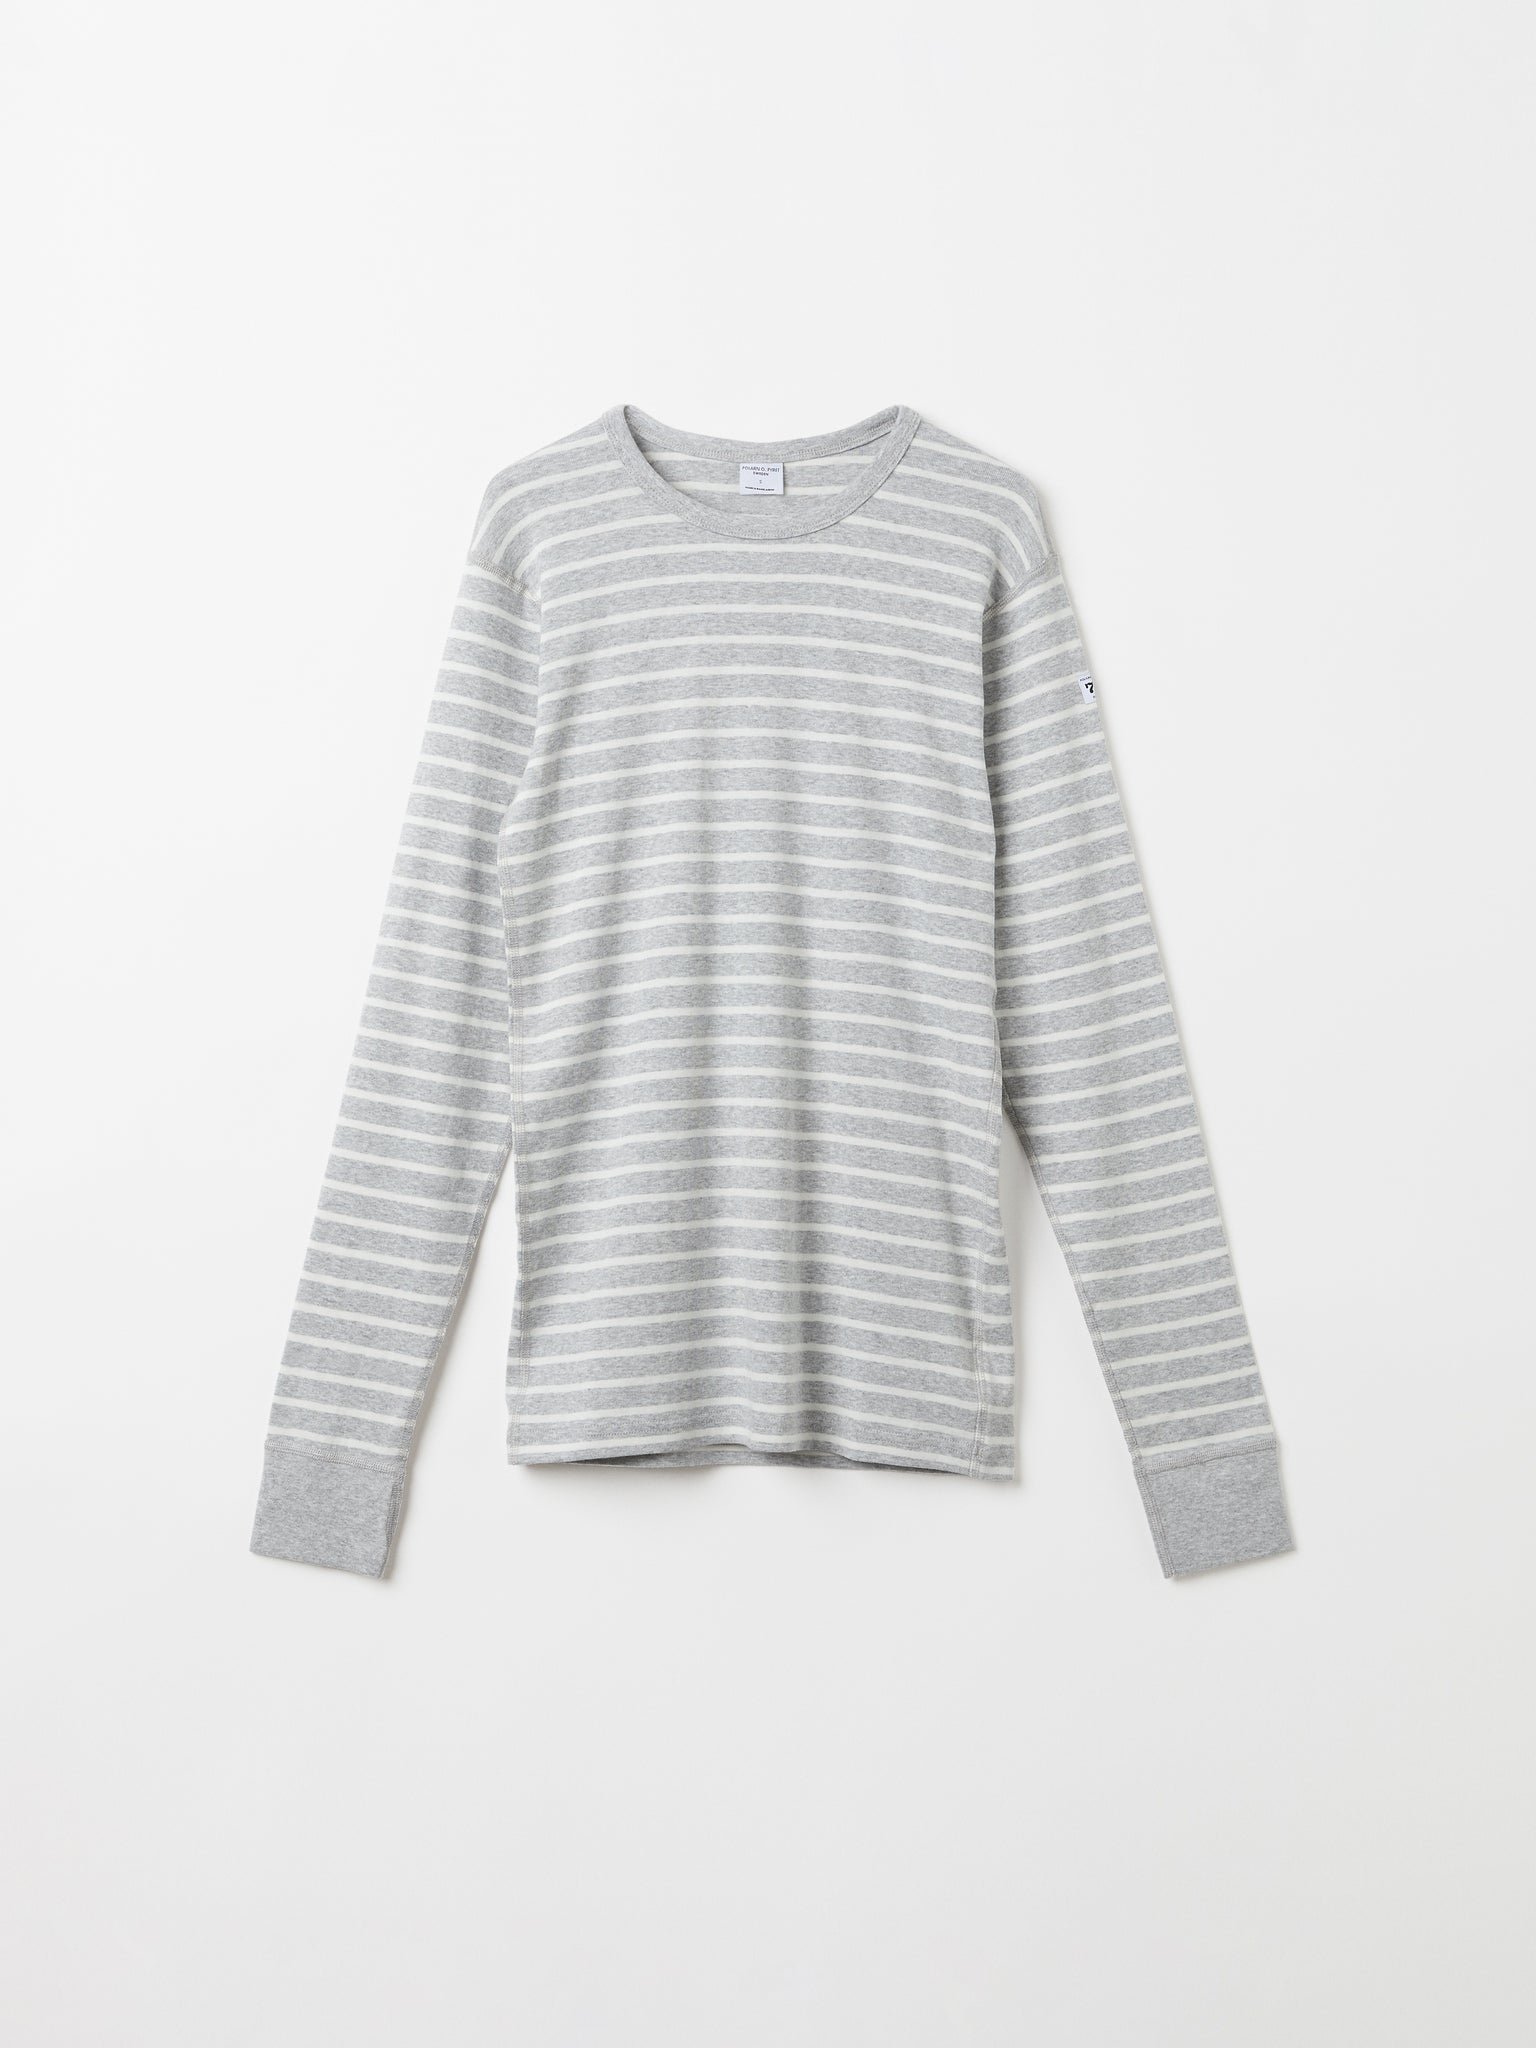 Grey & White Striped Long Sleeve Kids Top 